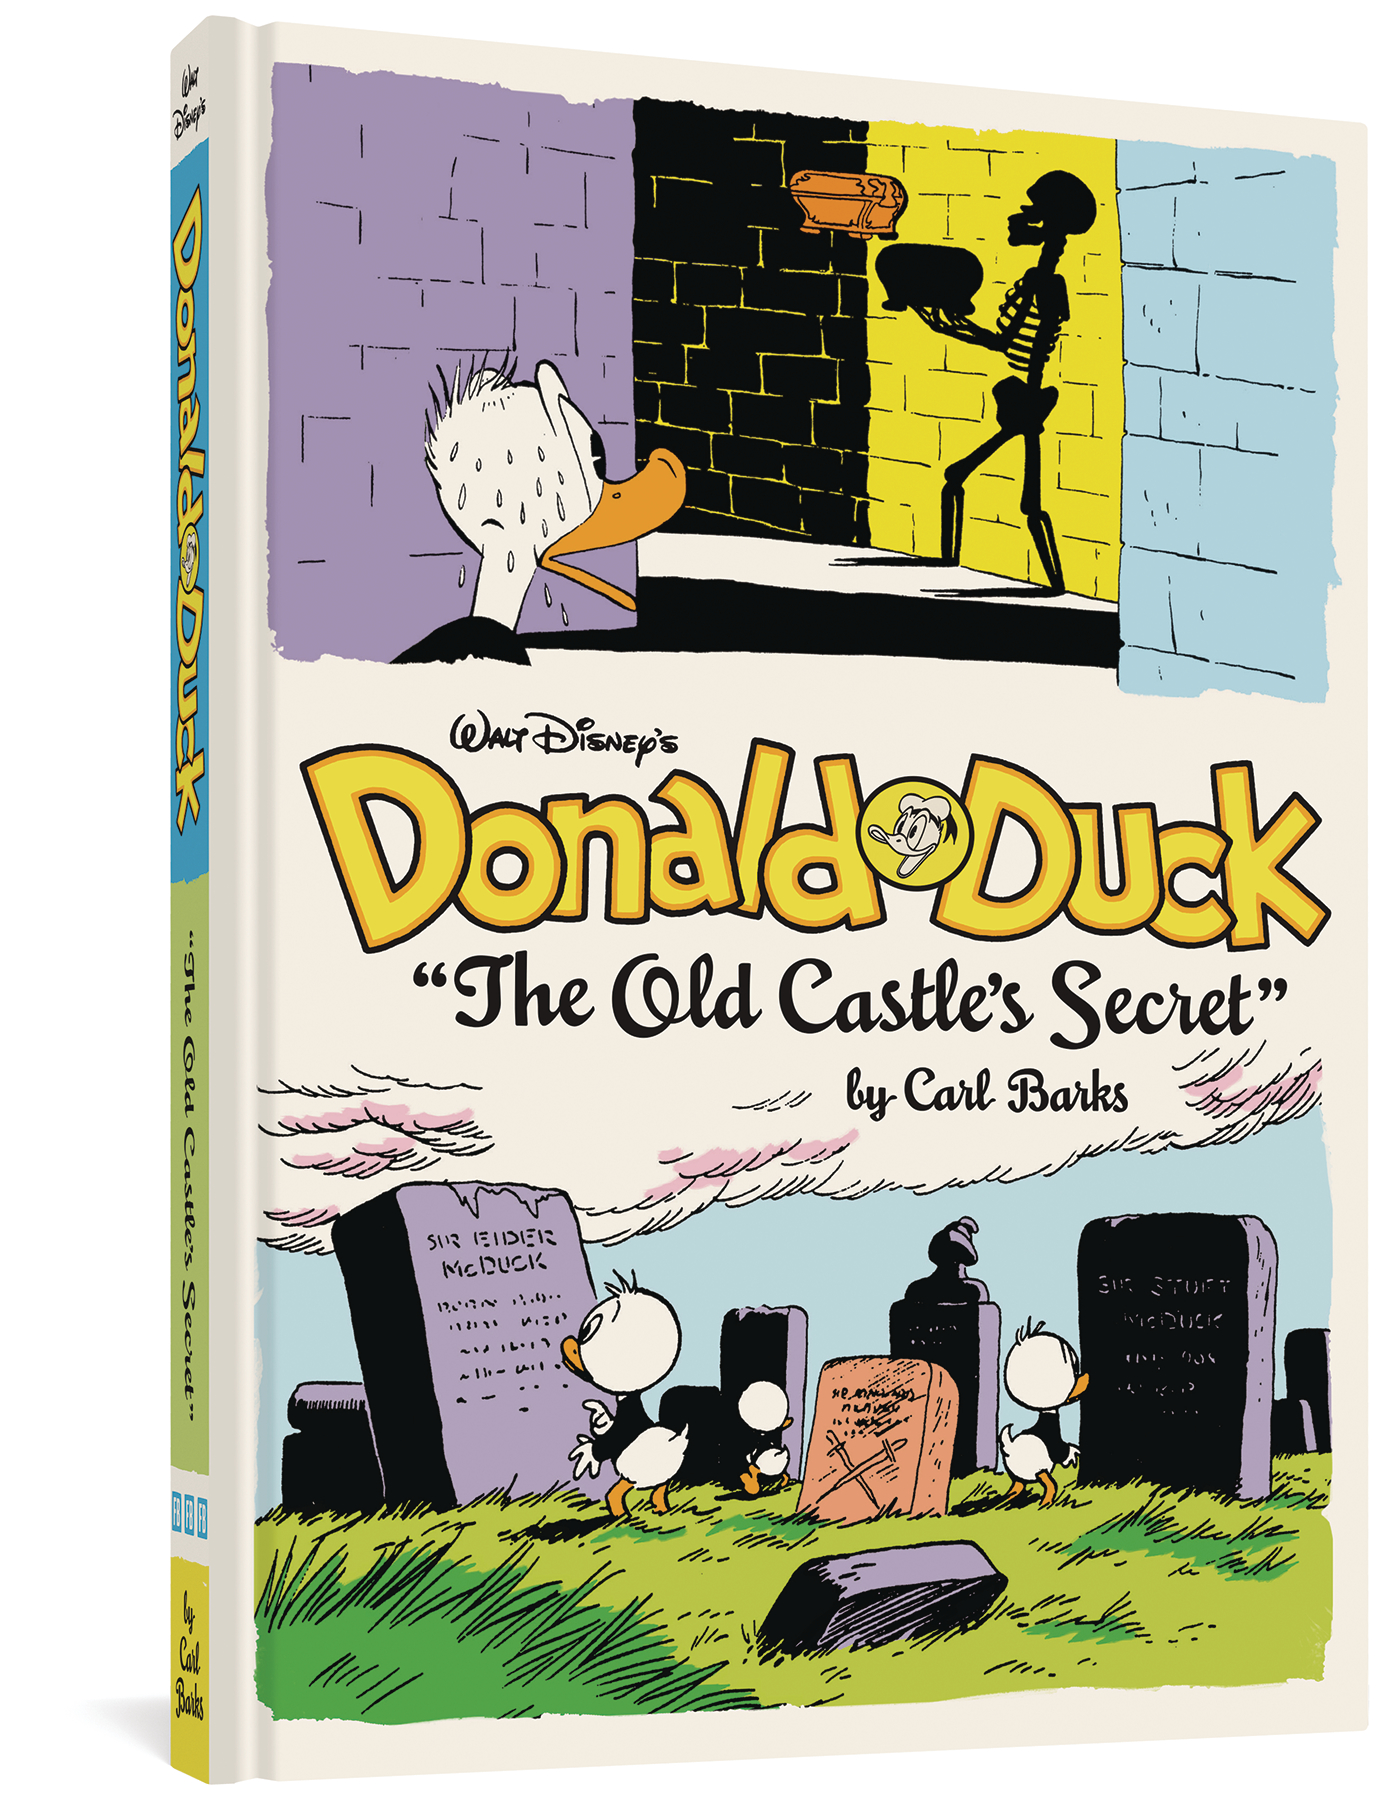 Complete Carl Barks Disney Library Hardcover Volume 6 Walt Disney's Donald Duck The Old Castle's Secret